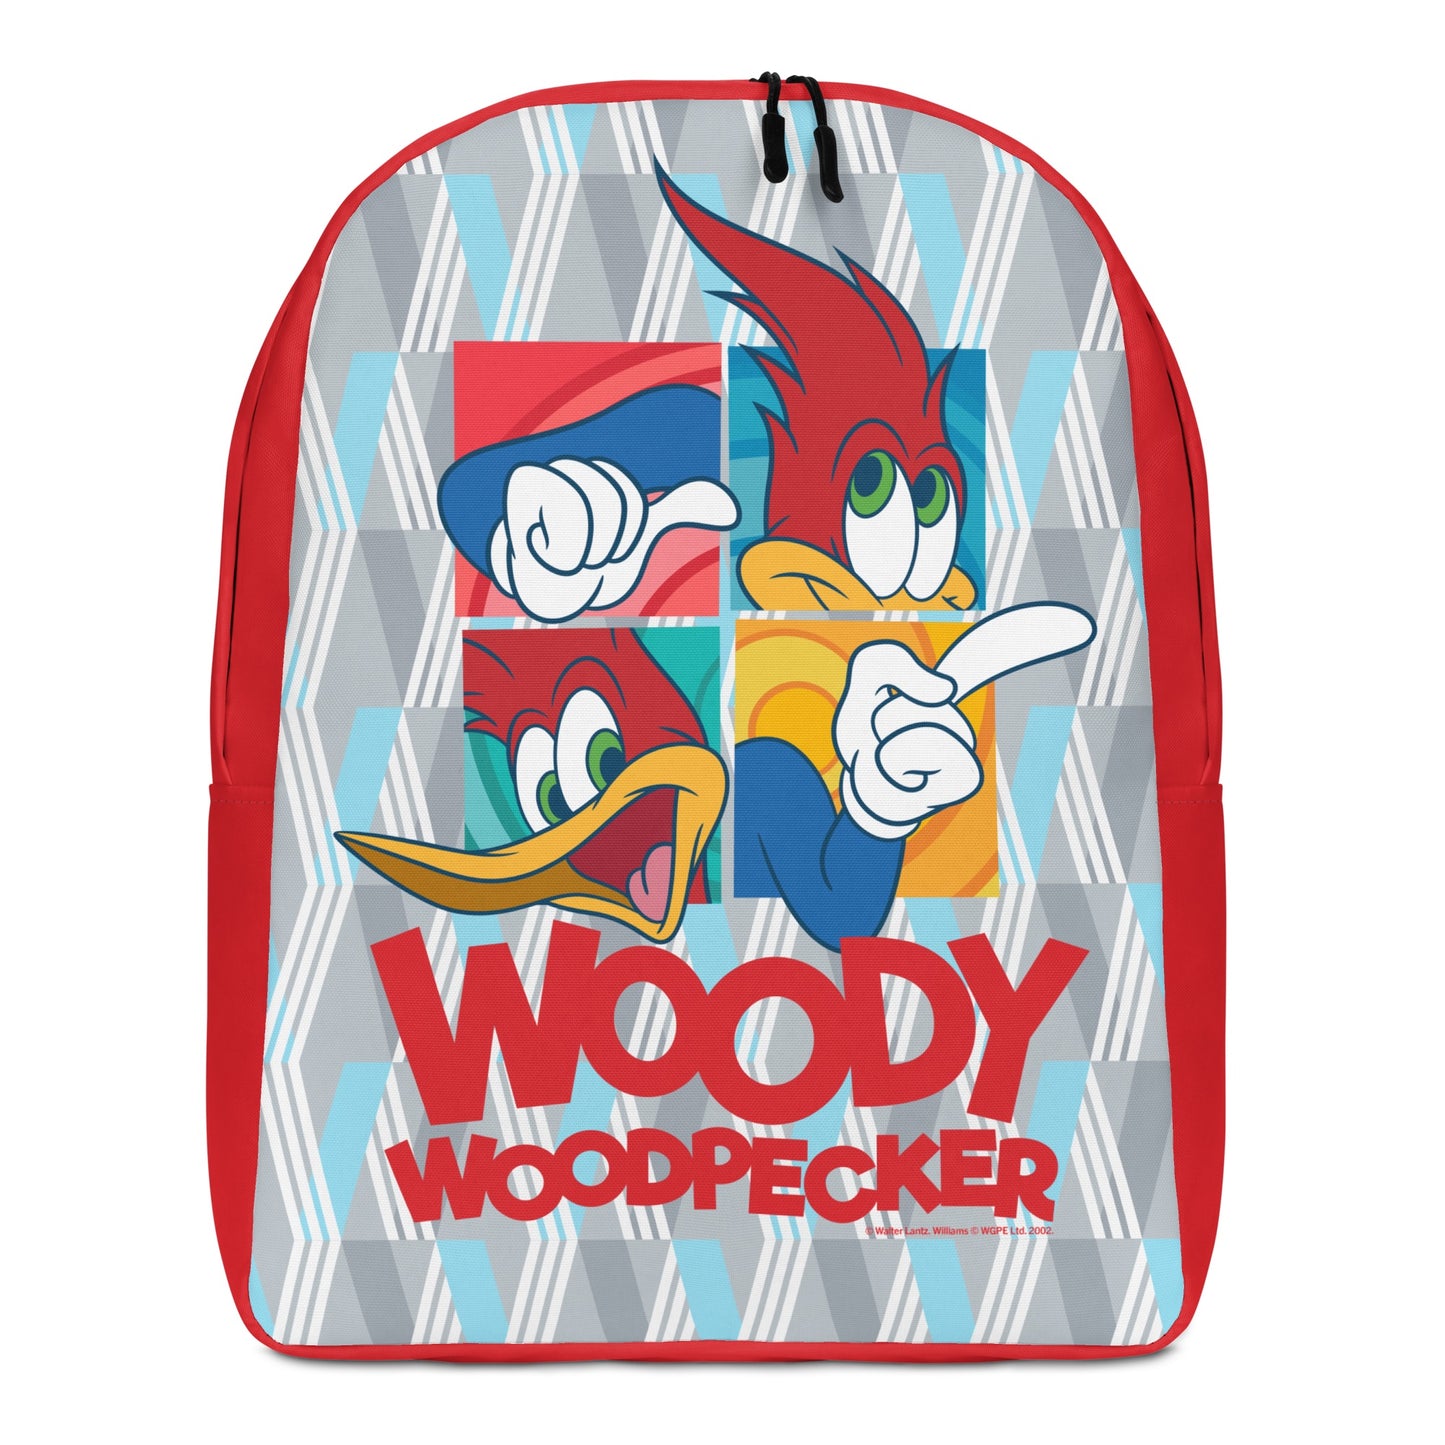 Woody Woodpecker Backpack